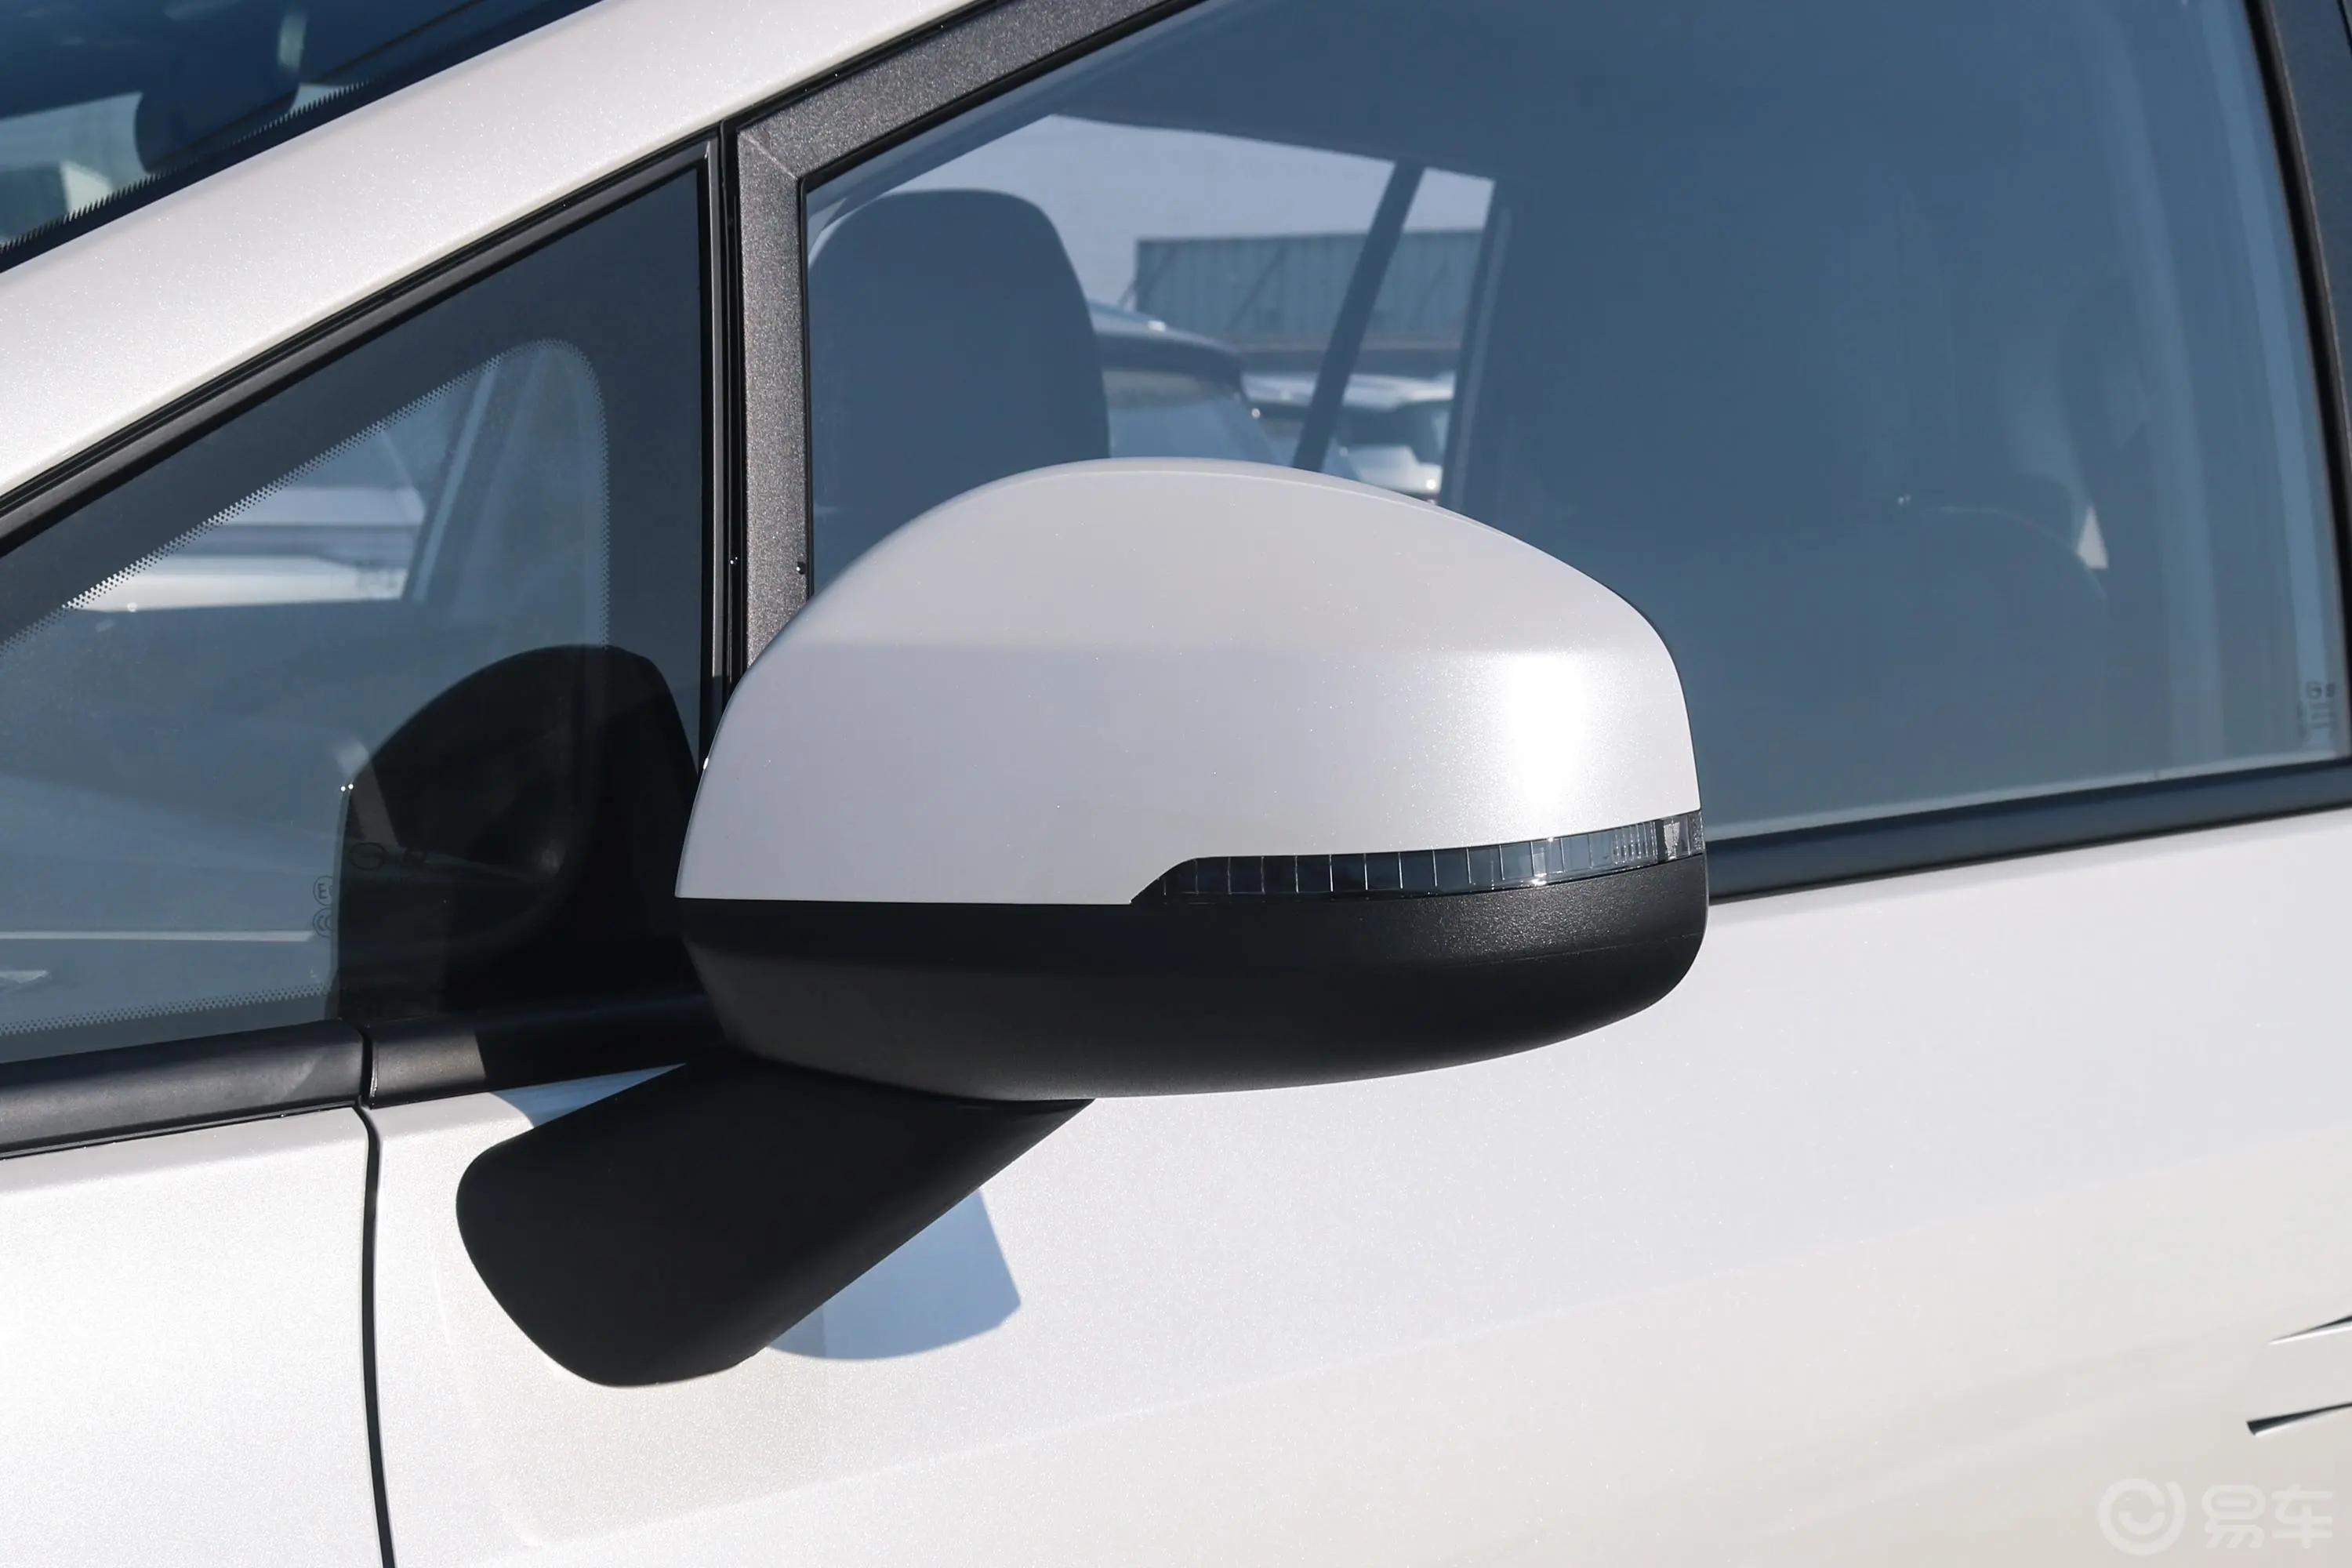 AION YPlus 510km 70 乐享版主驾驶后视镜背面